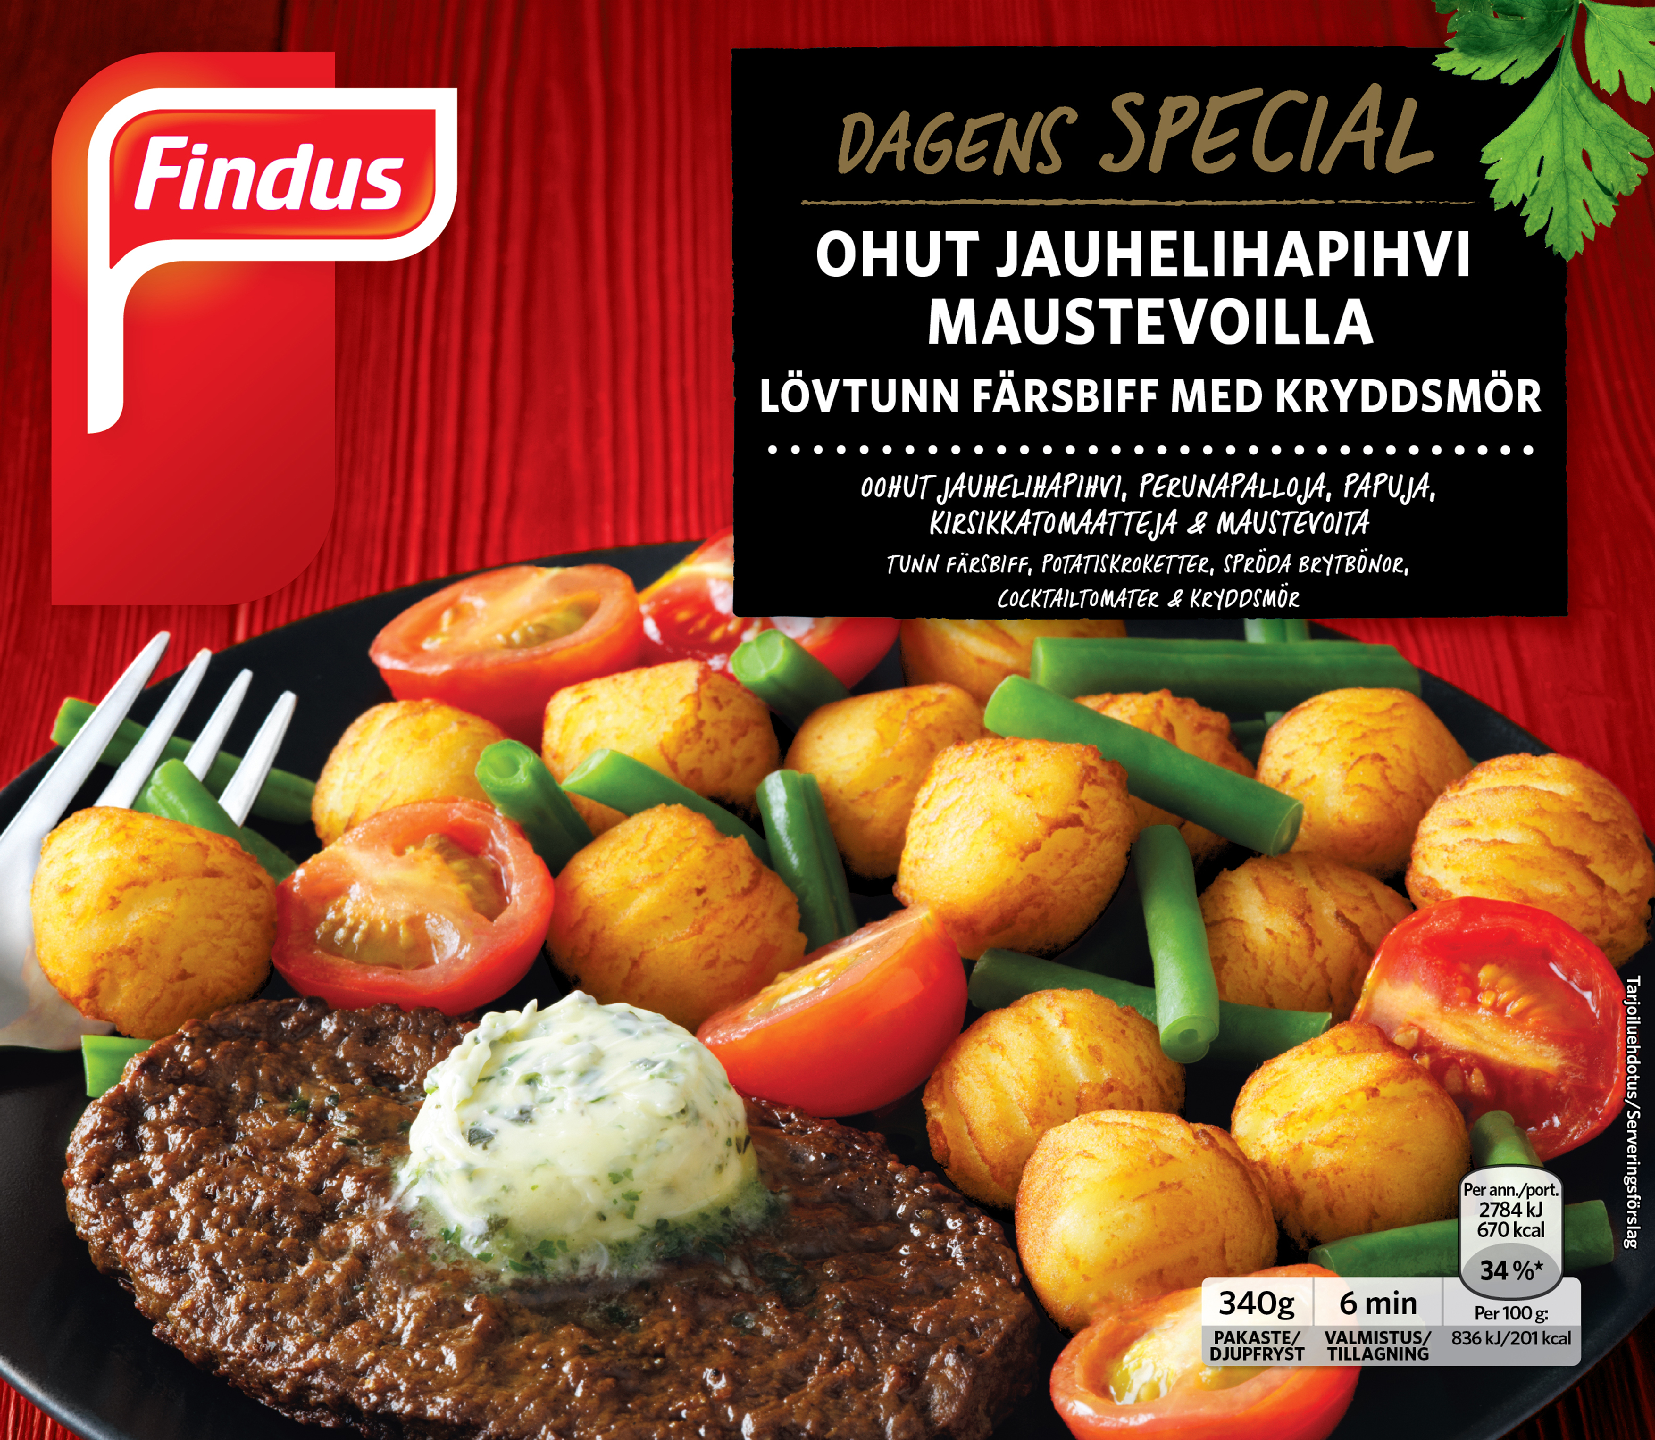 Findus Dagens Special ohut jauhelihapihvi maustevoilla 340g pakaste